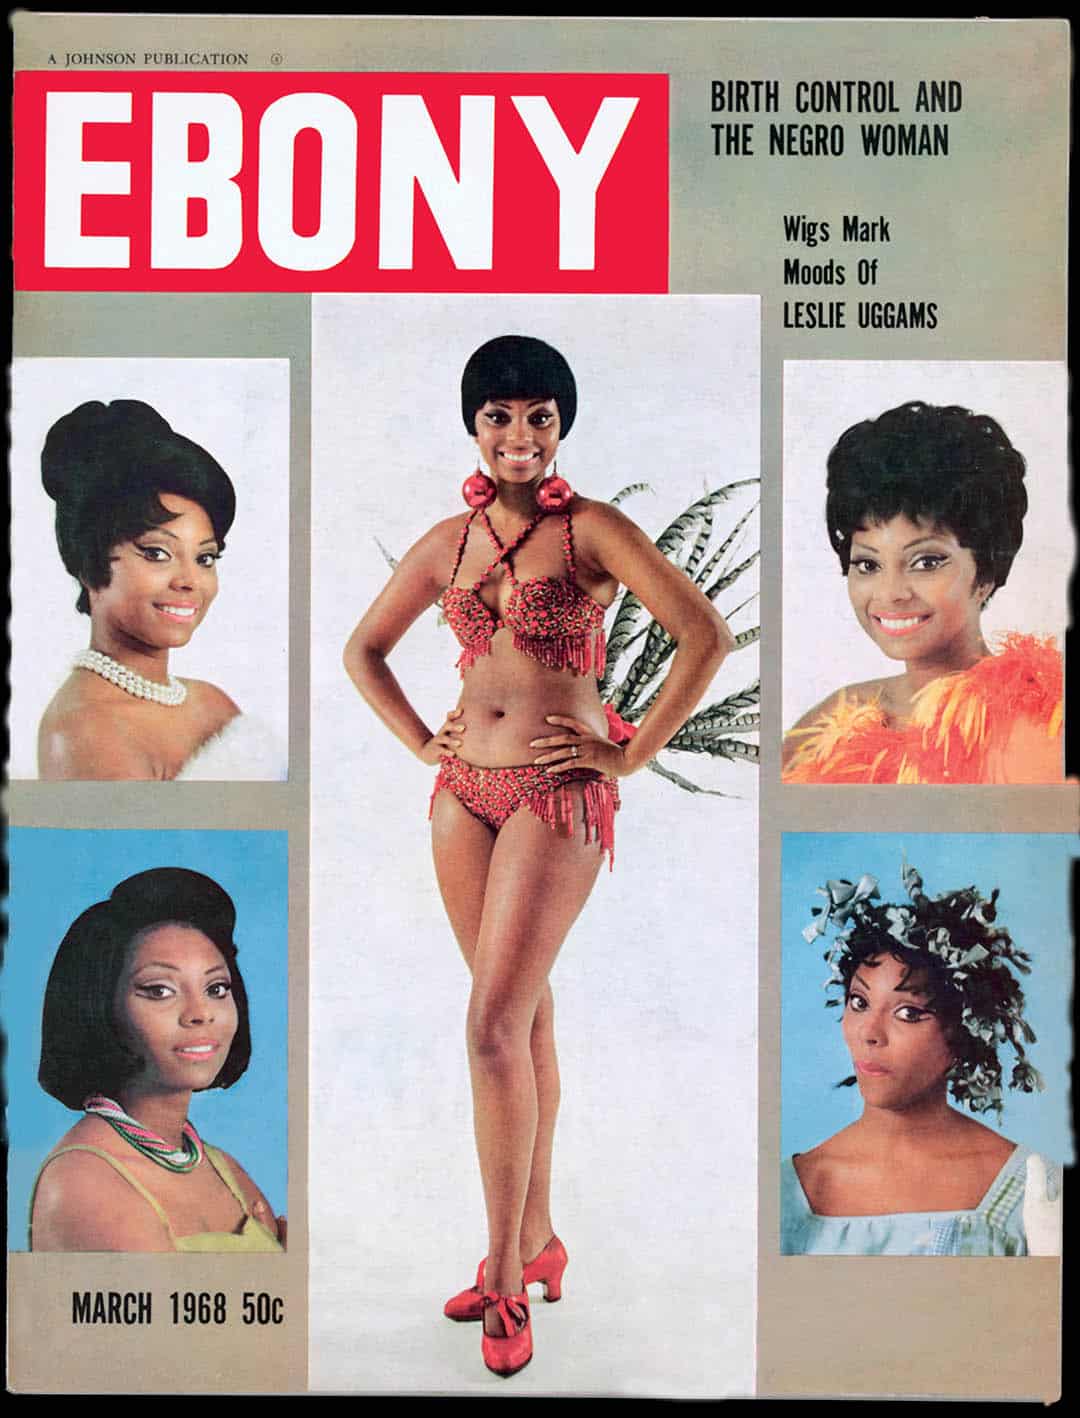 Feb 1968 cover of ebony magazine